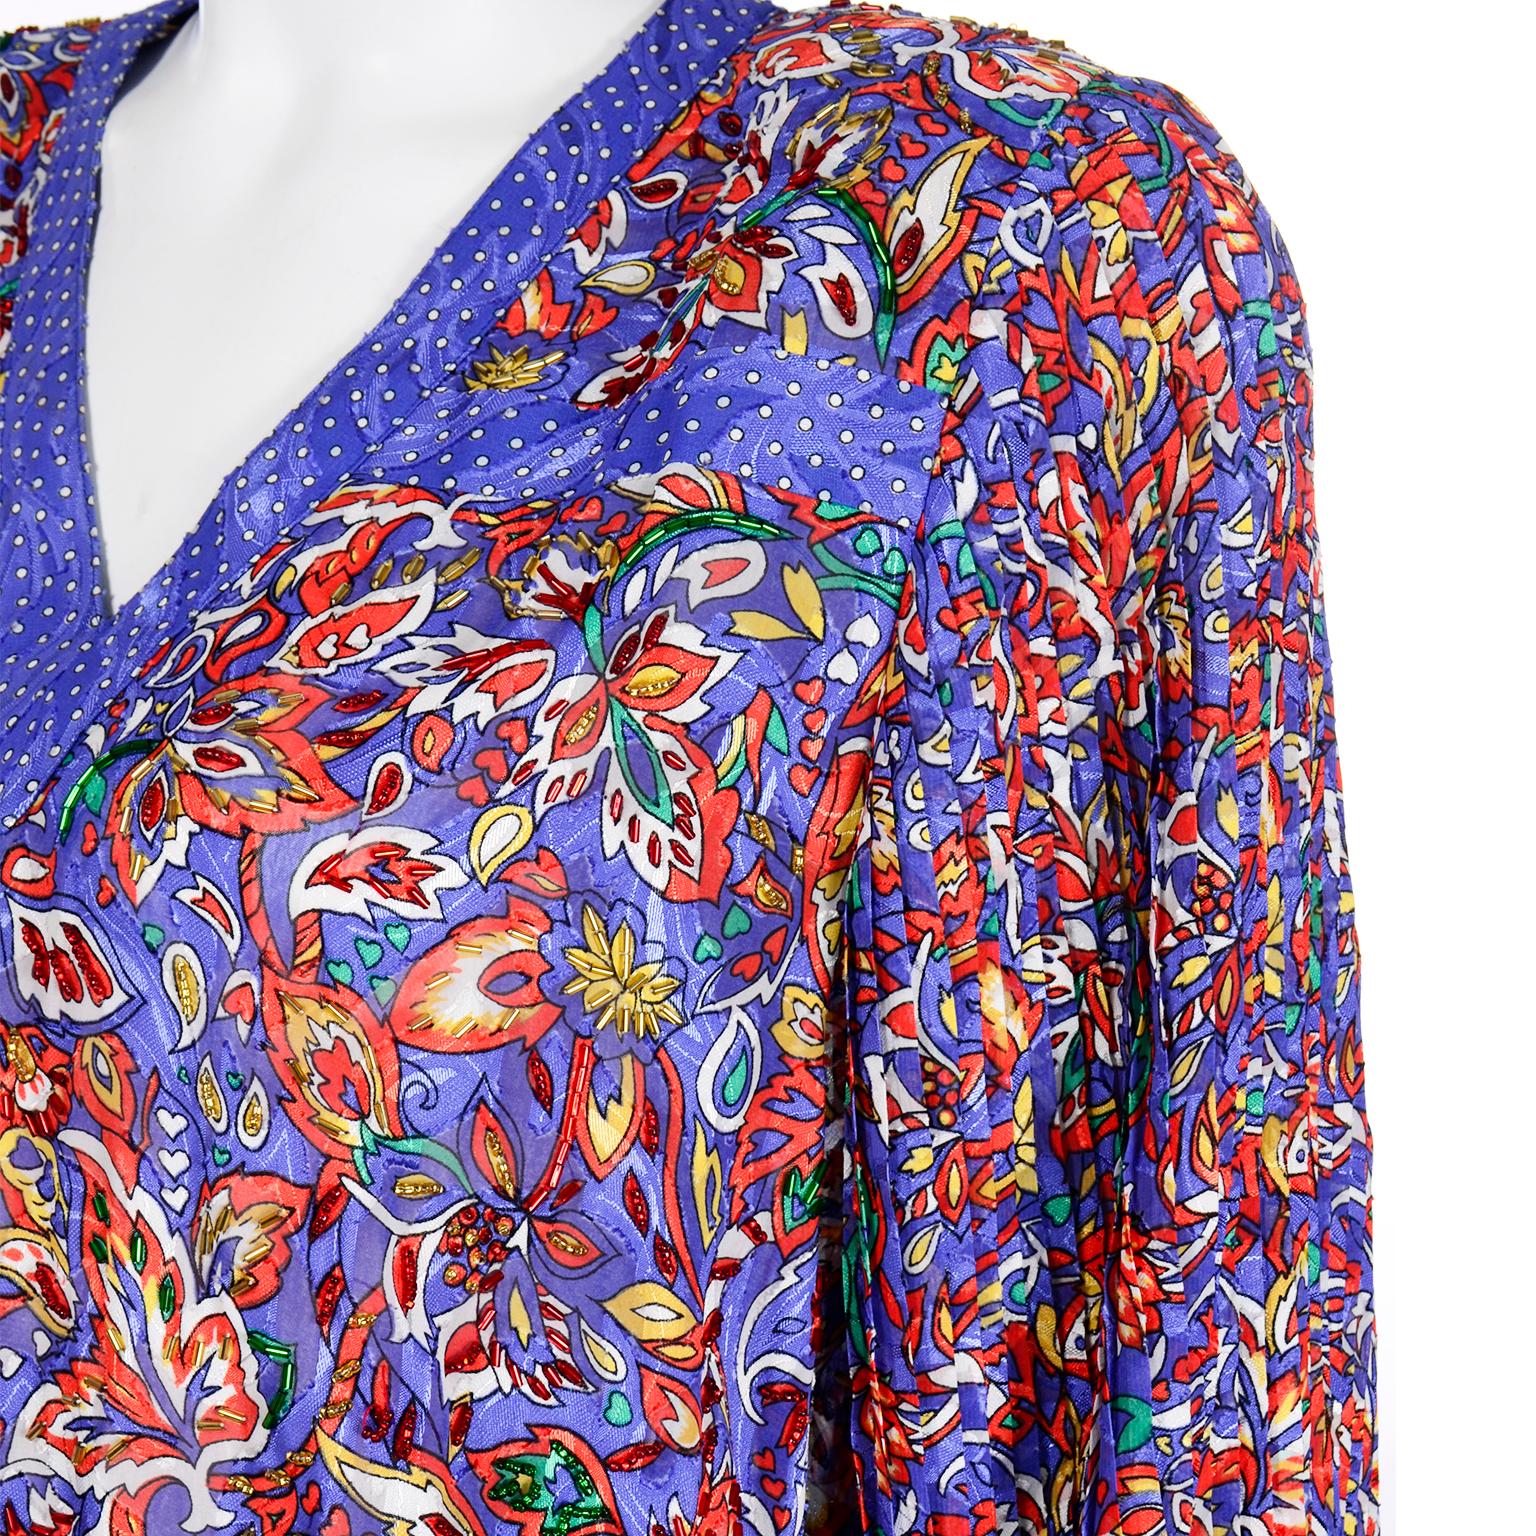 Women's Vintage 1980s Diane Freis Colorful Mixed Pattern Print Beaded Dress W Sash